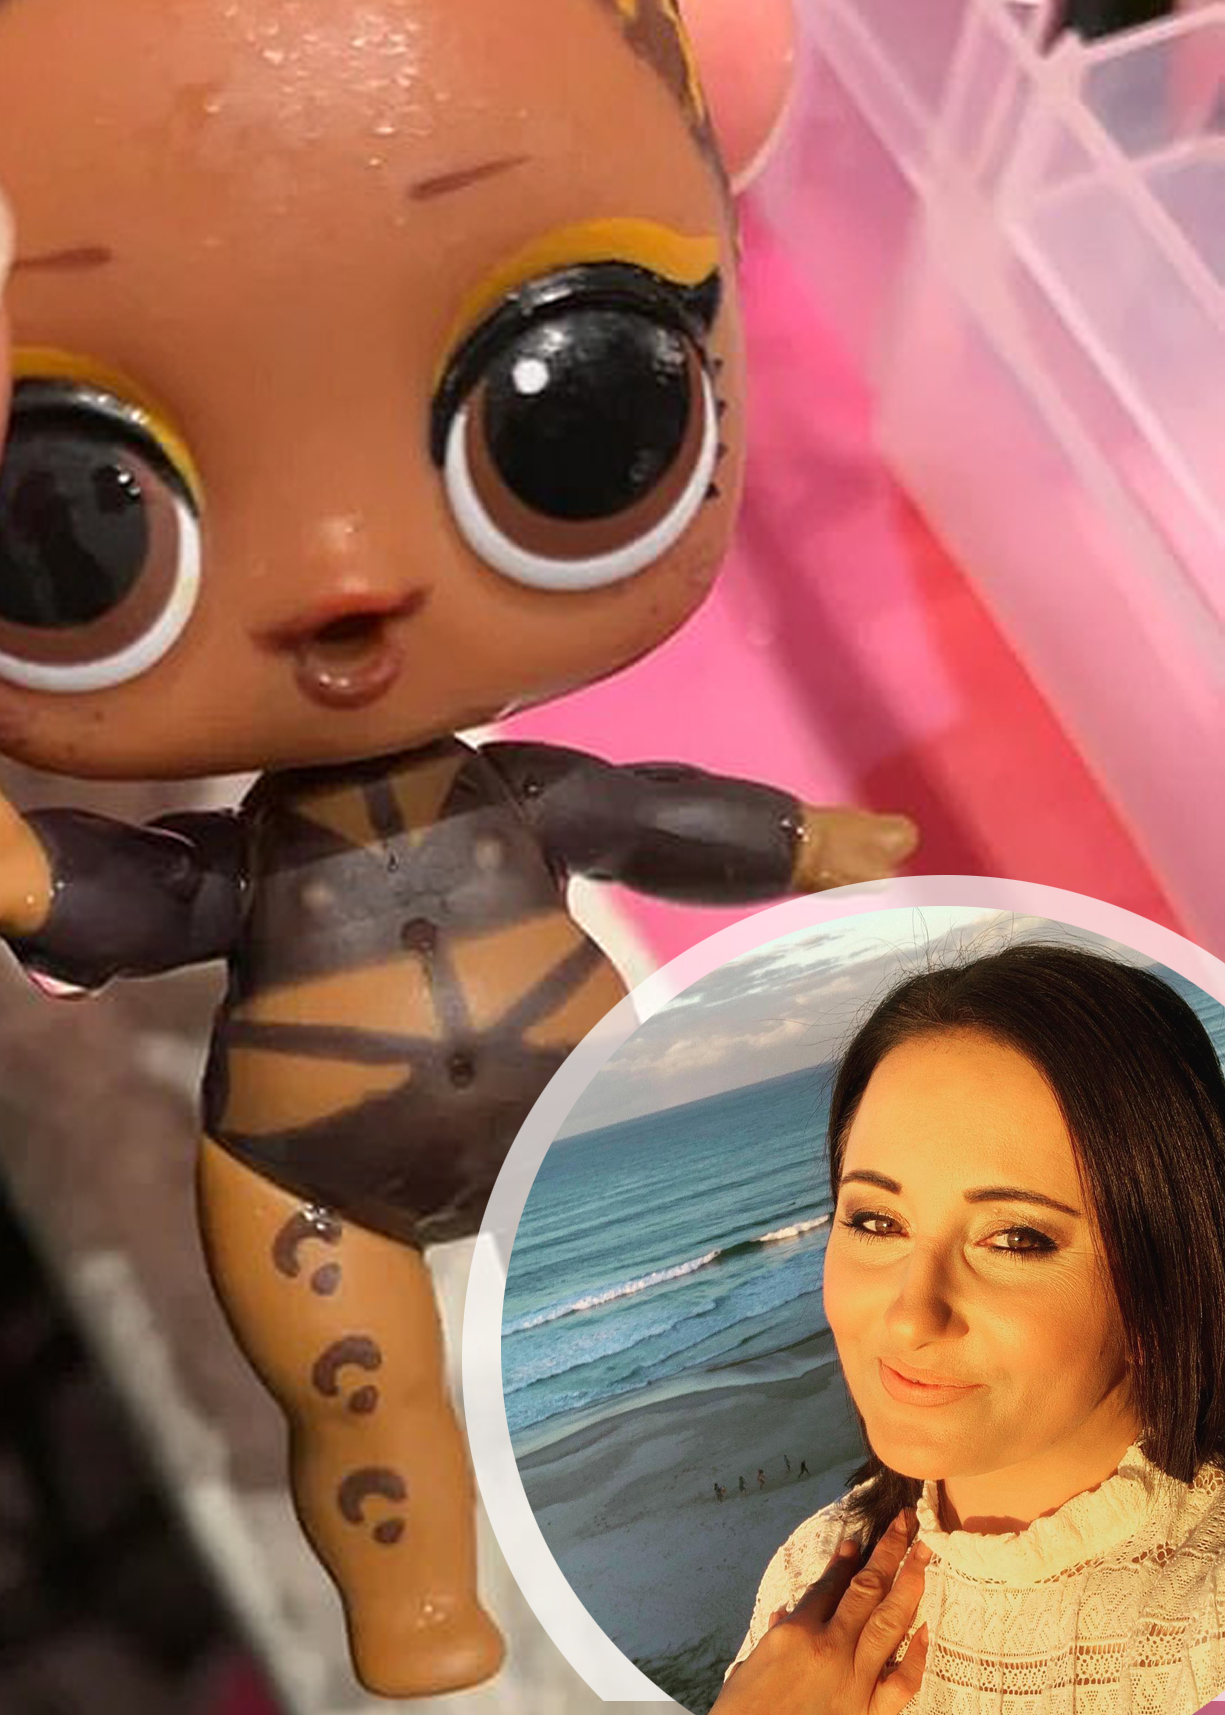 LOL Doll Bondage Surprise Mums outraged video goes viral Practical Parenting Australia